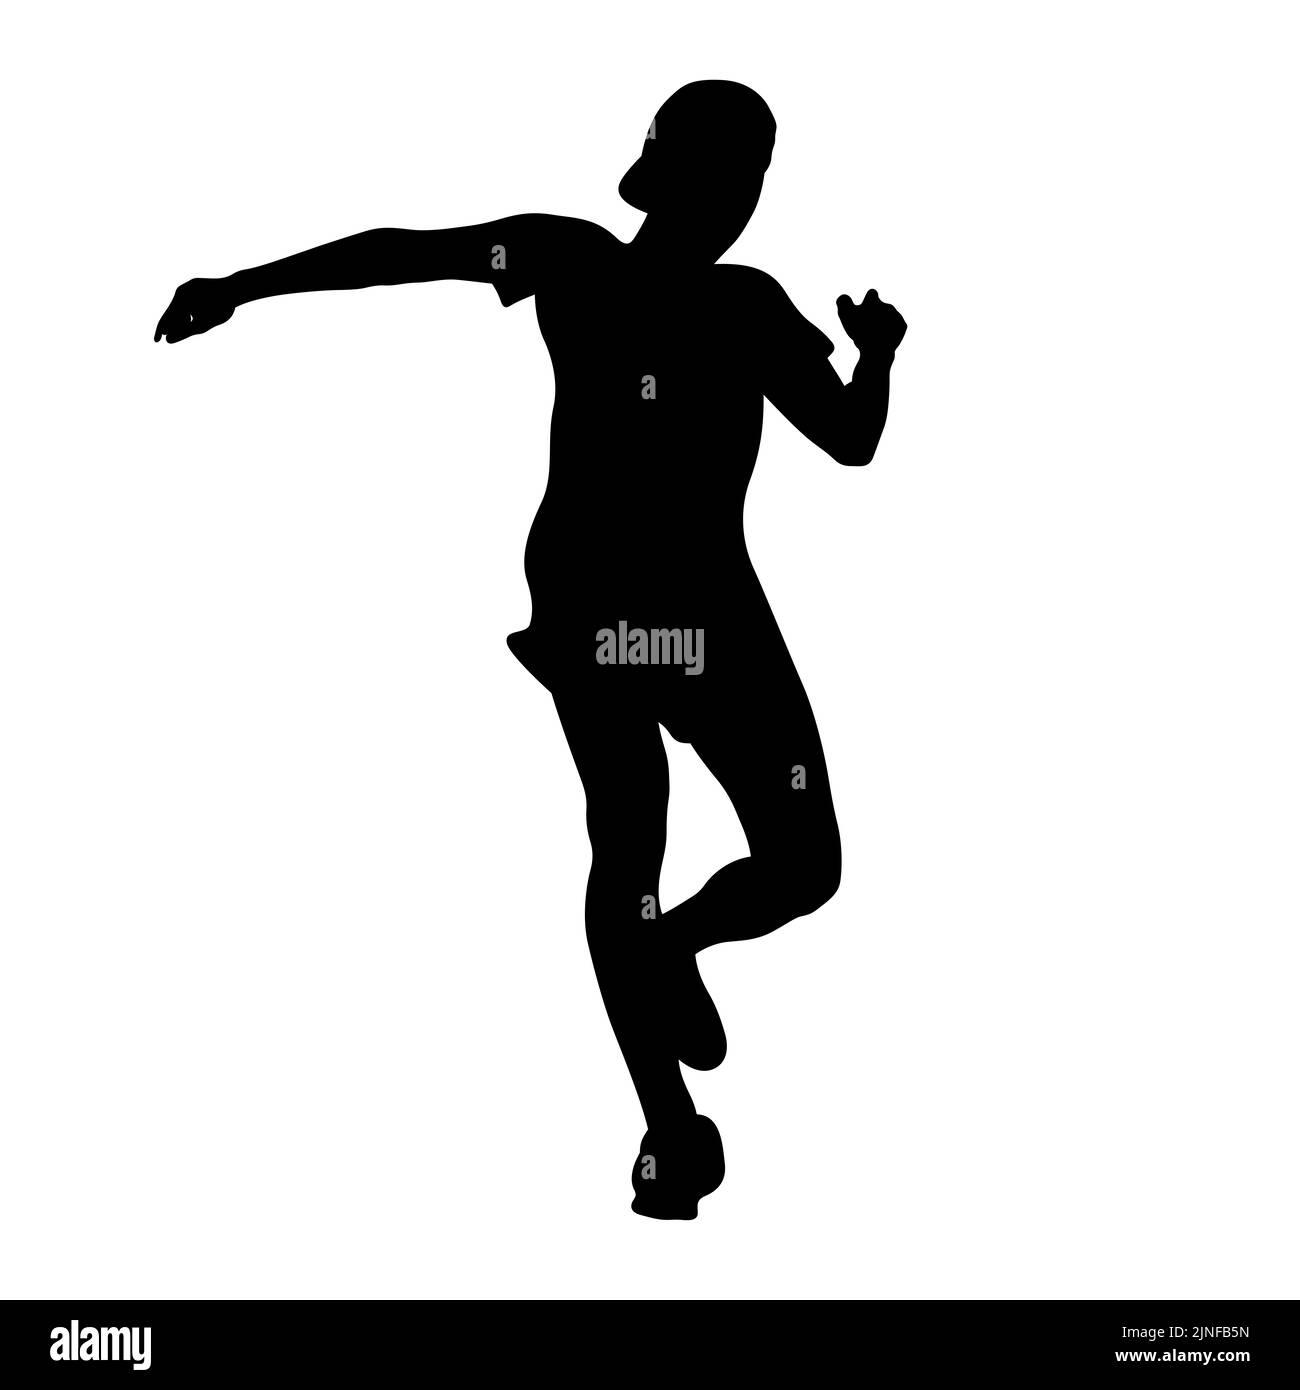 athlete runner running down mountain black silhouette Stock Photo